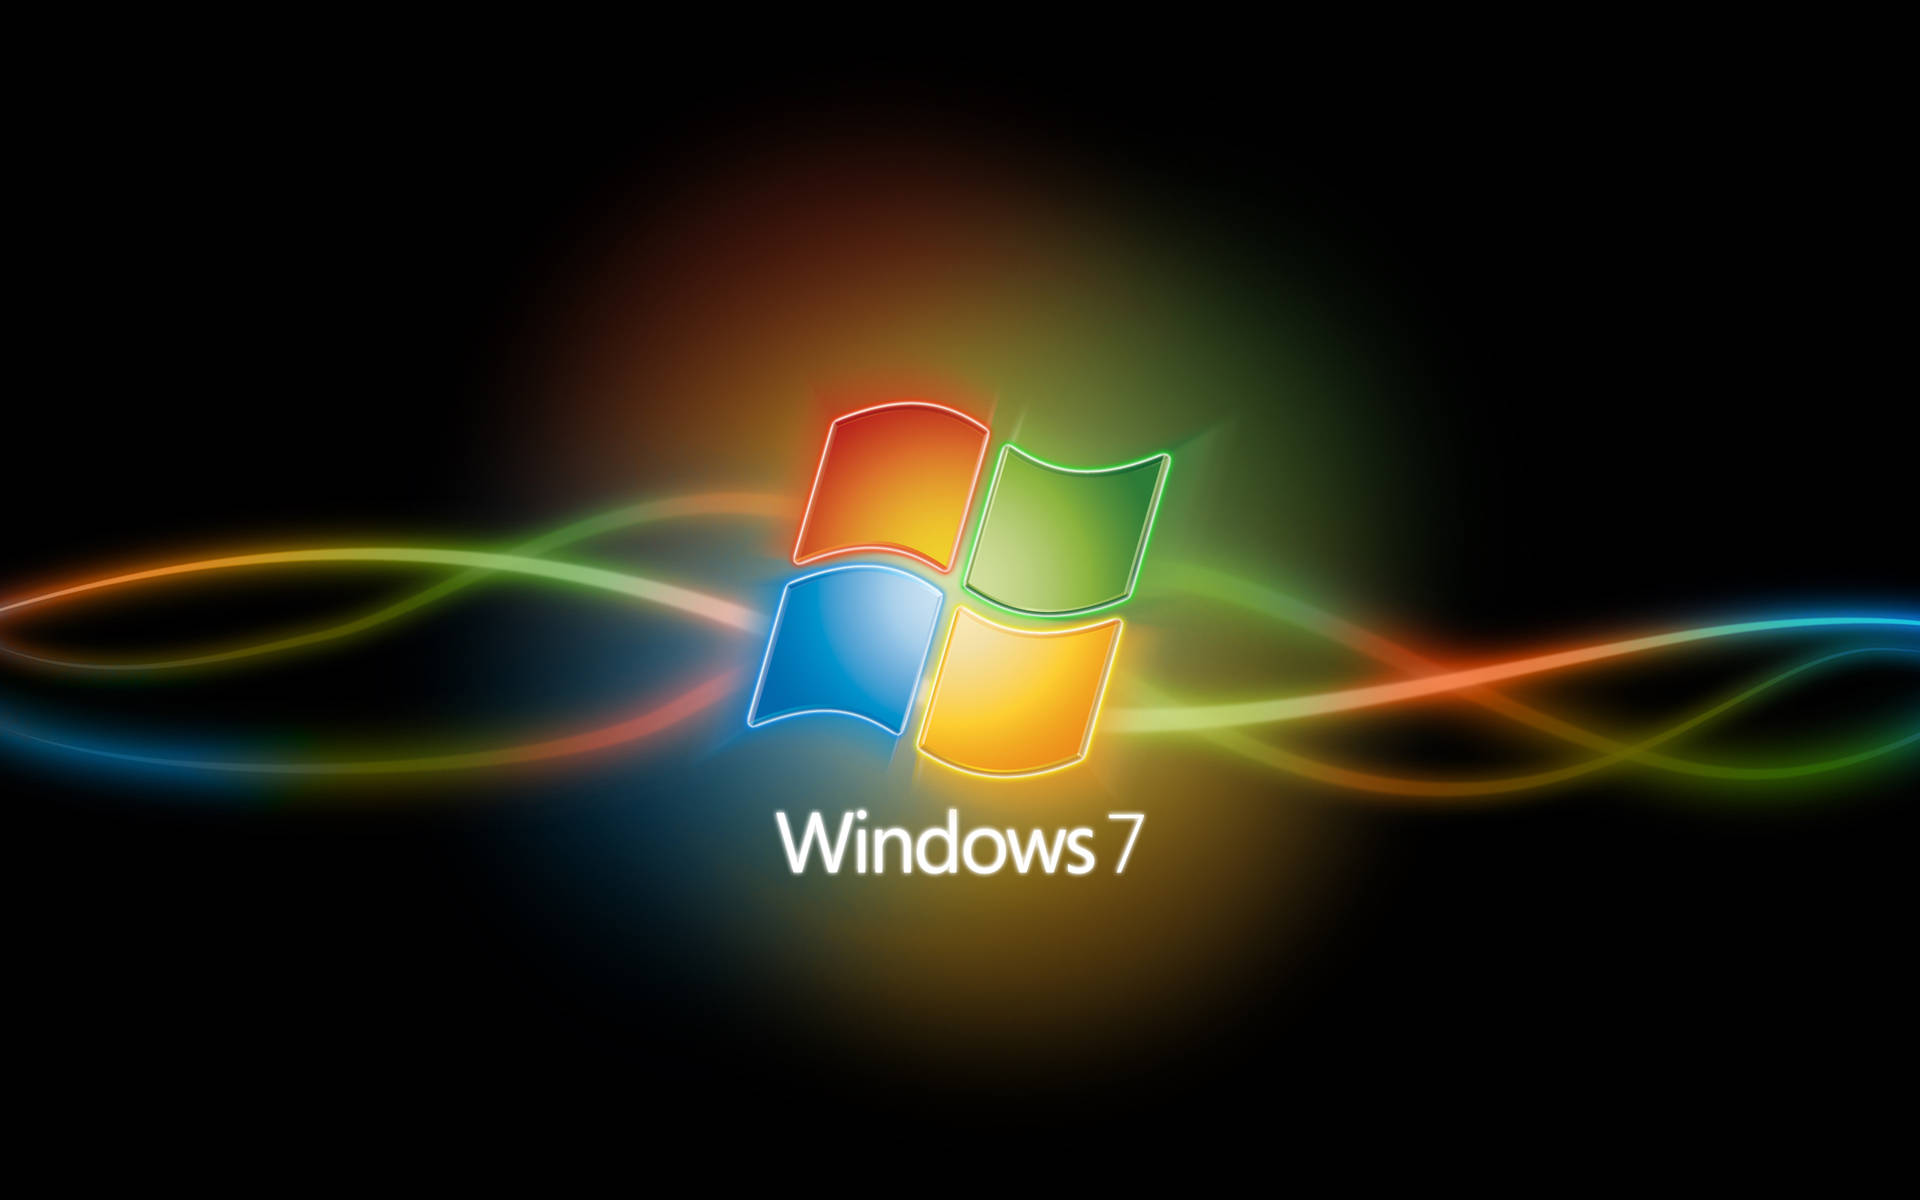 Neon Windows 7 Logo